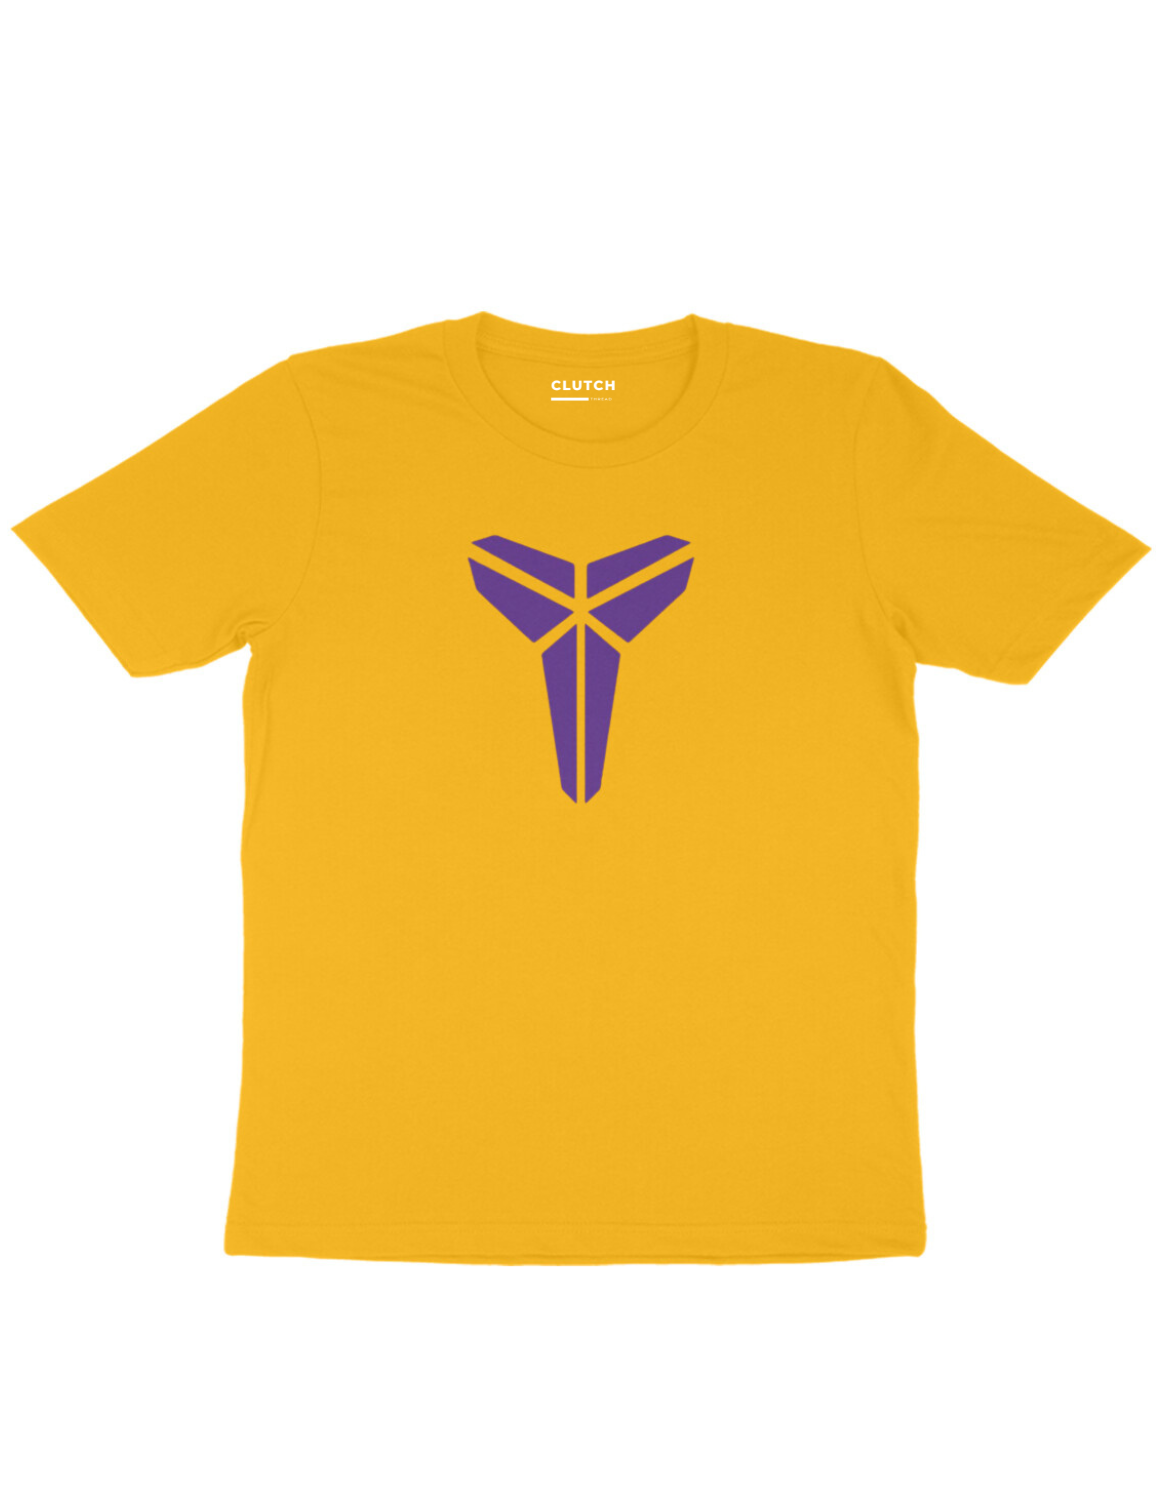 Kobe Bryant- The Mamba Logo- Half Sleeve T-Shirt